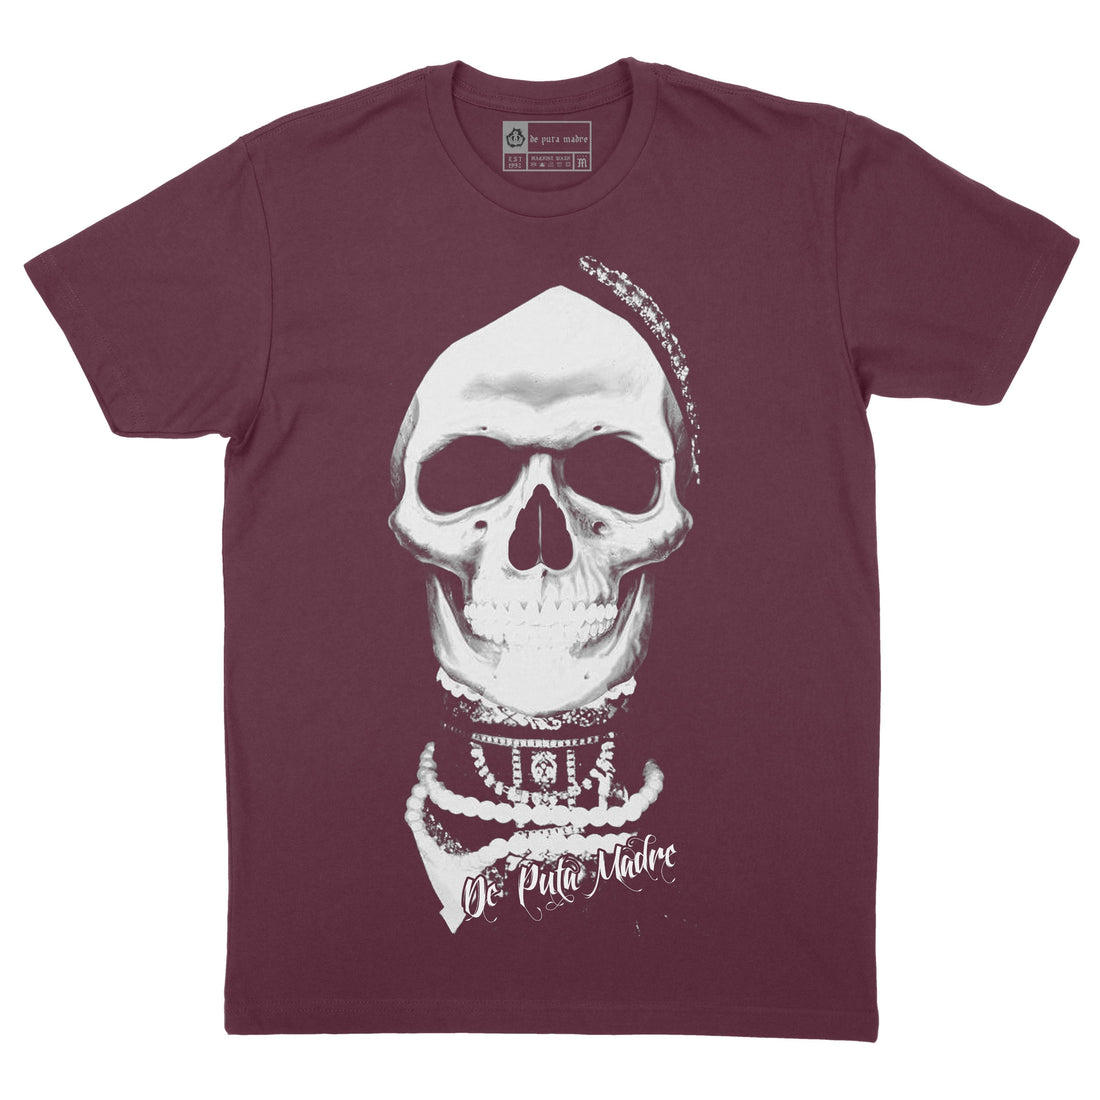 T-shirt da uomo DPM 69 design Santa Muerte mesicana